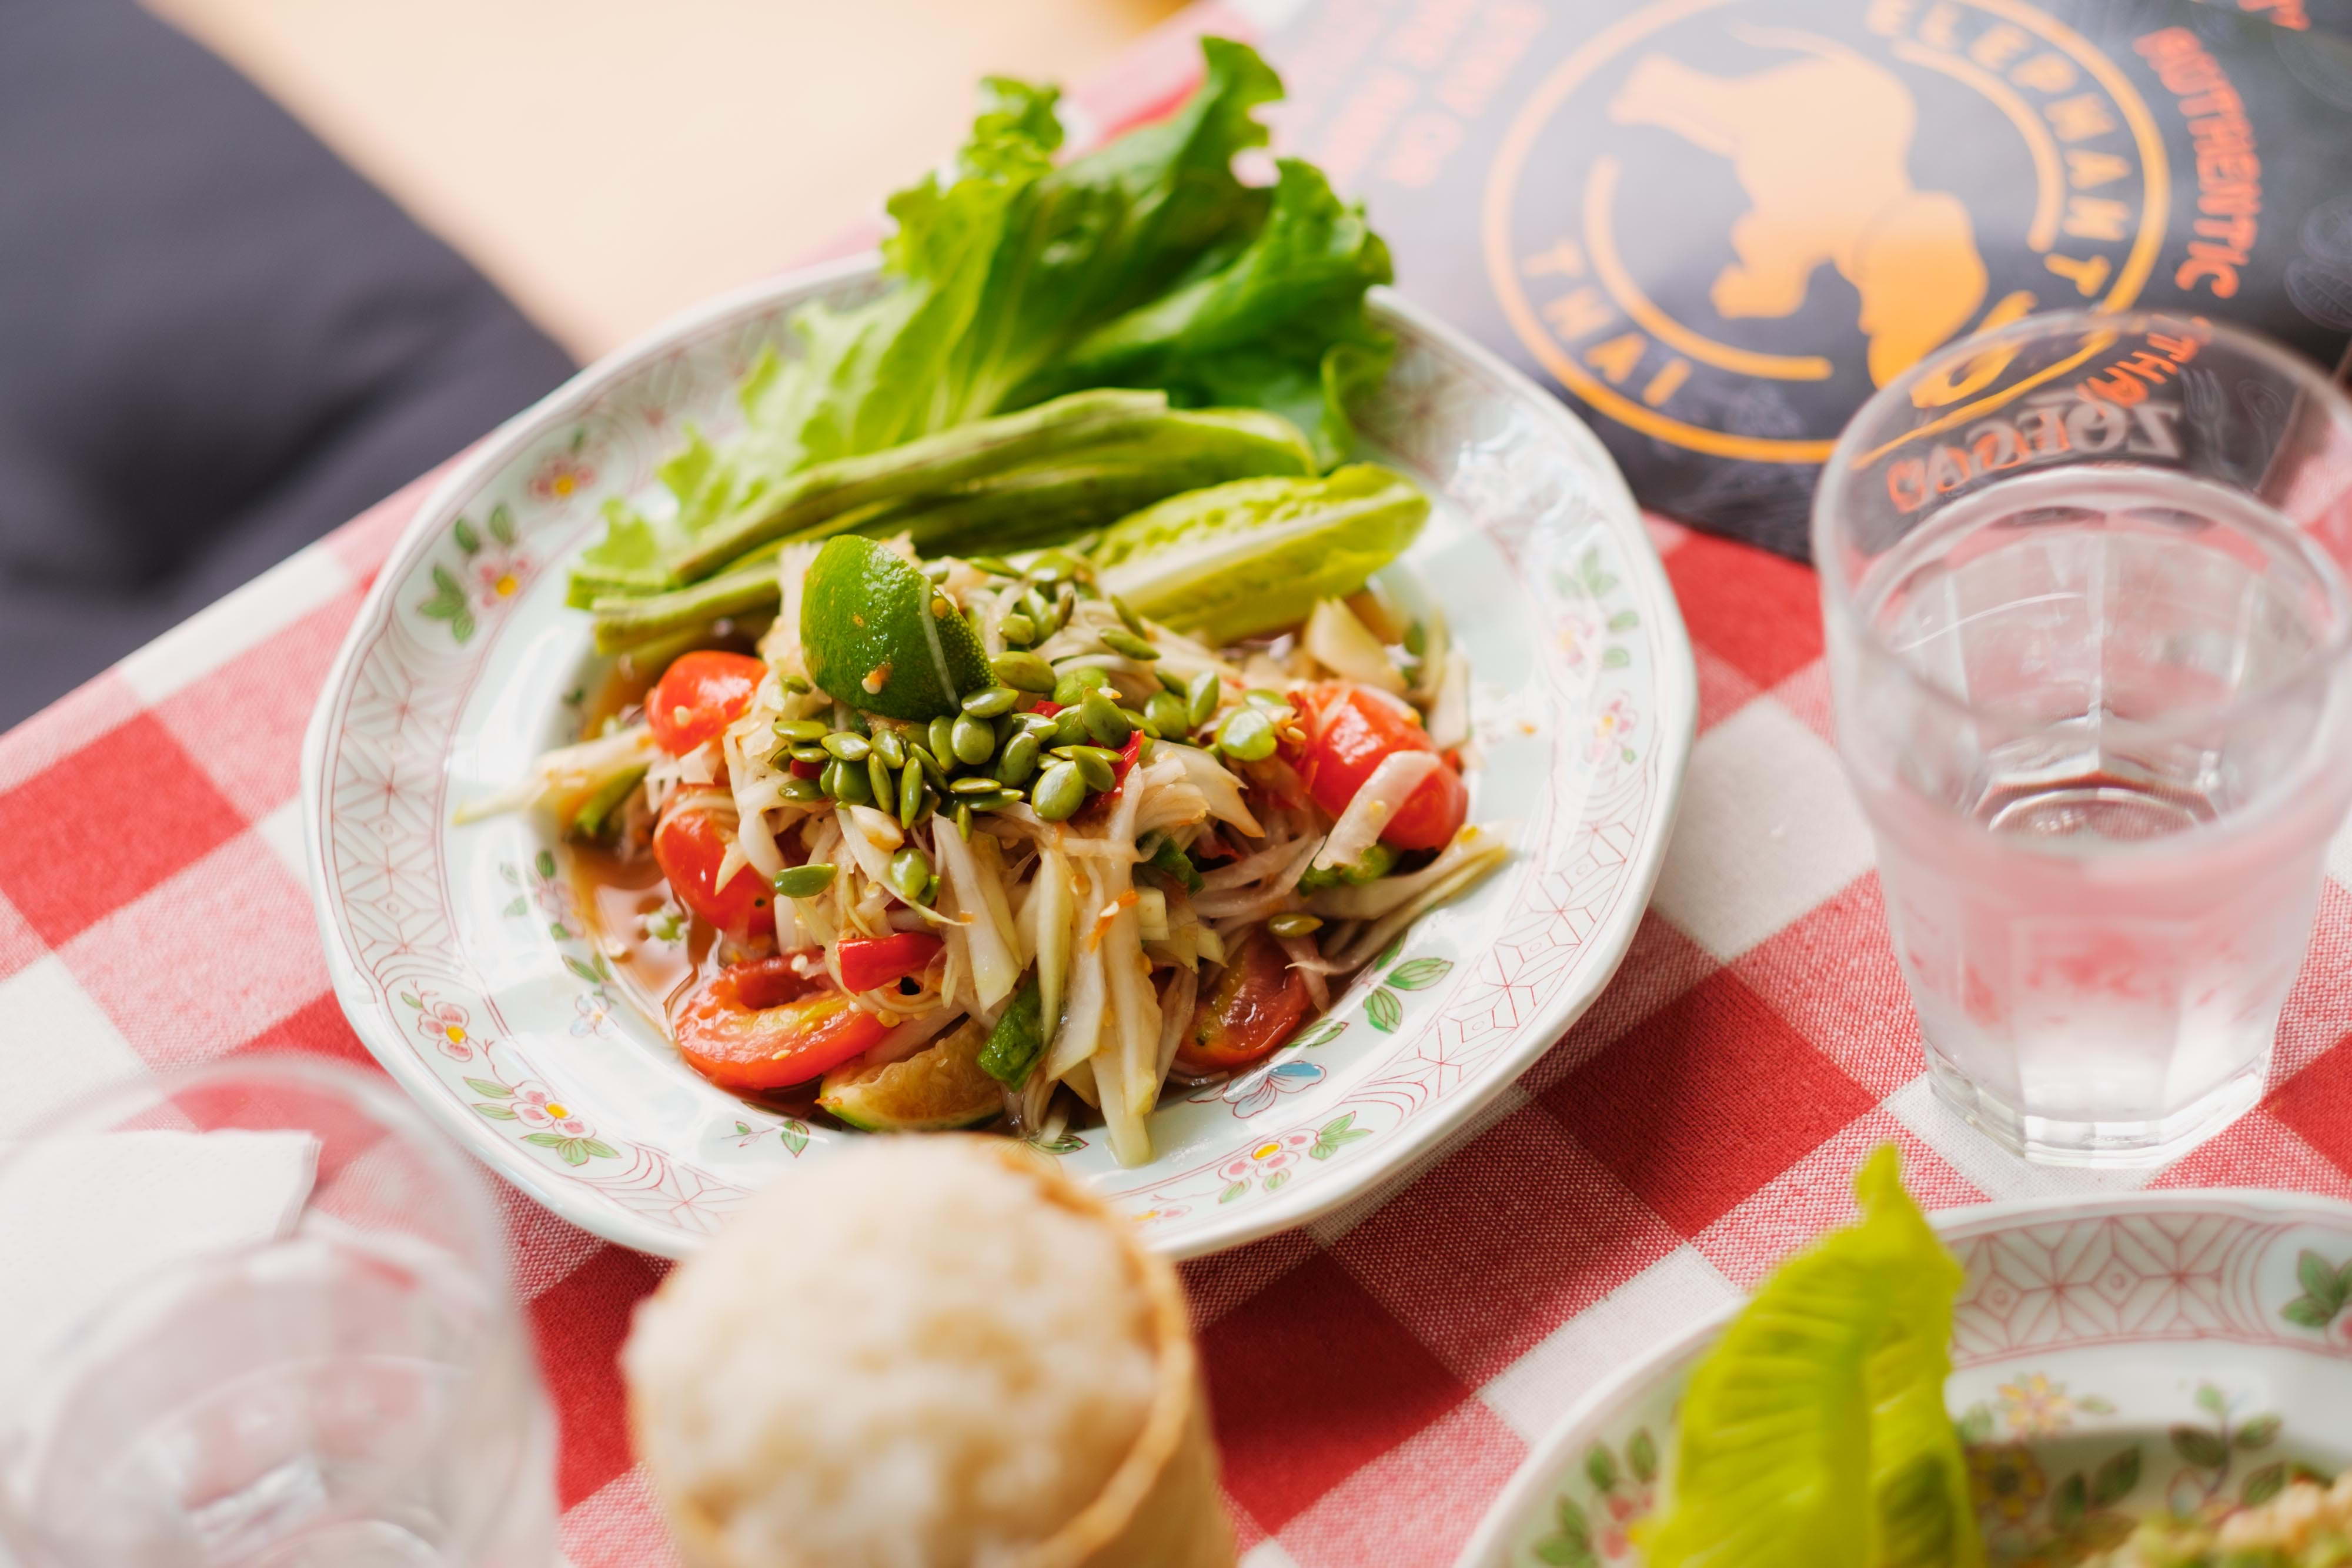 Elephant Thai – Lunch i city och Norrmalm